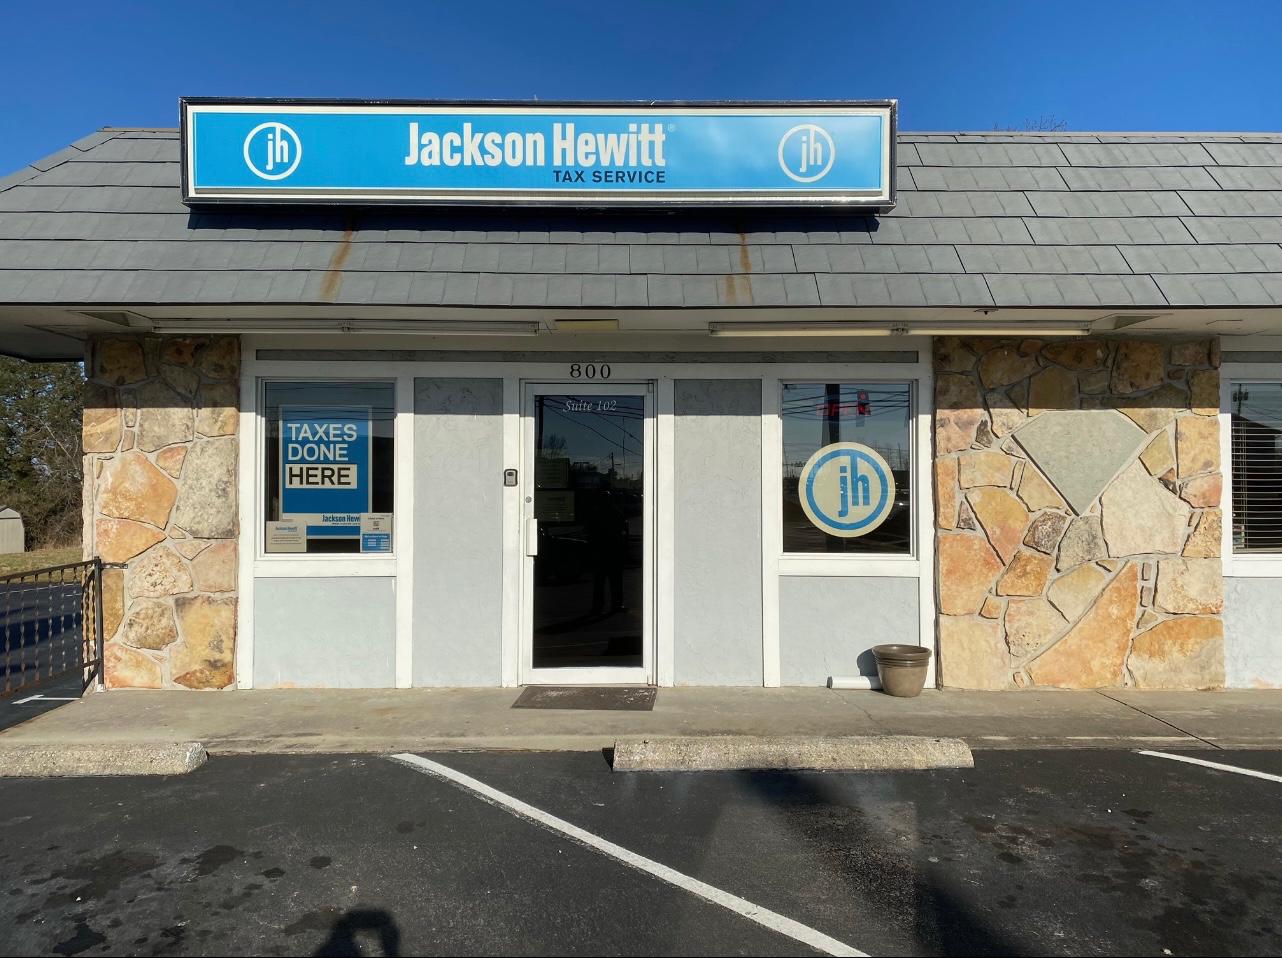 Jackson Hewitt Tax Service Crossville (931)244-6801